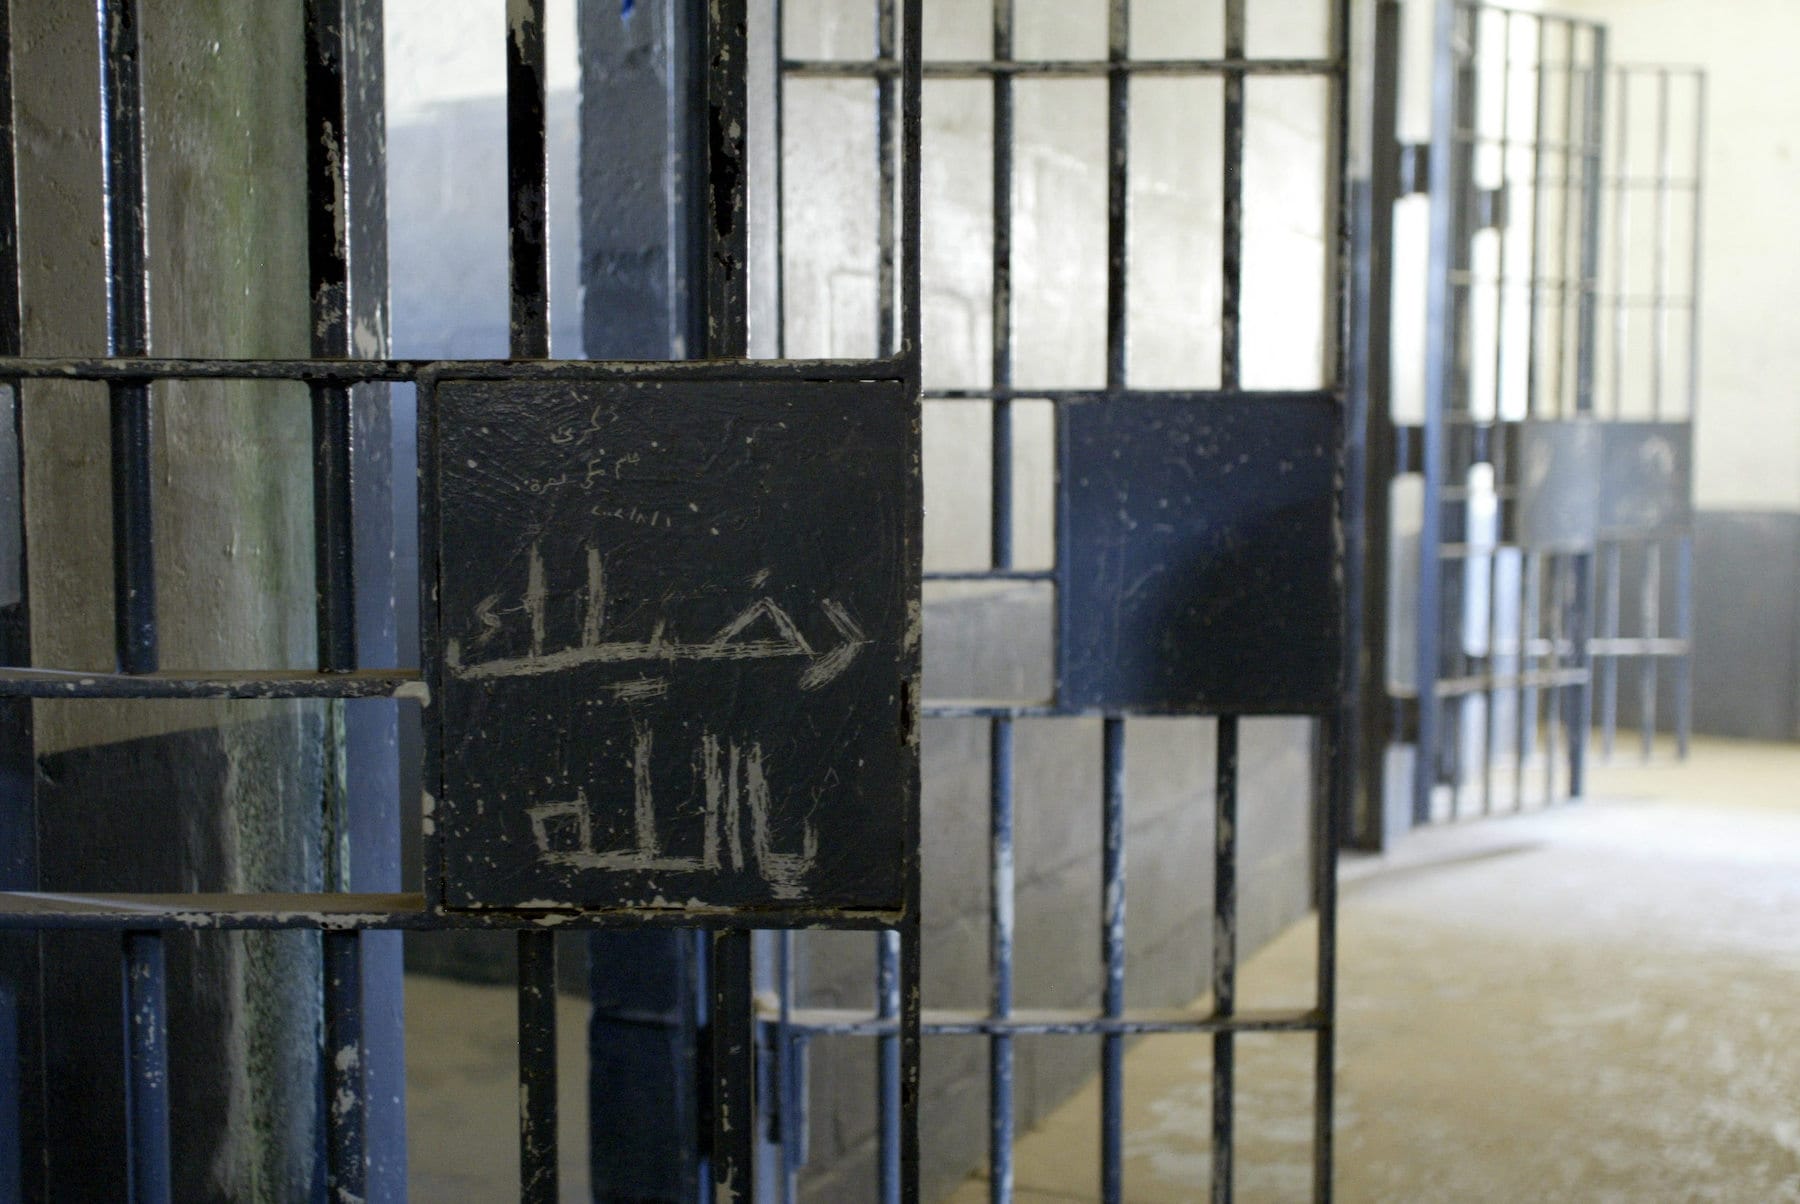 iraq prison same-sex relationships illegal